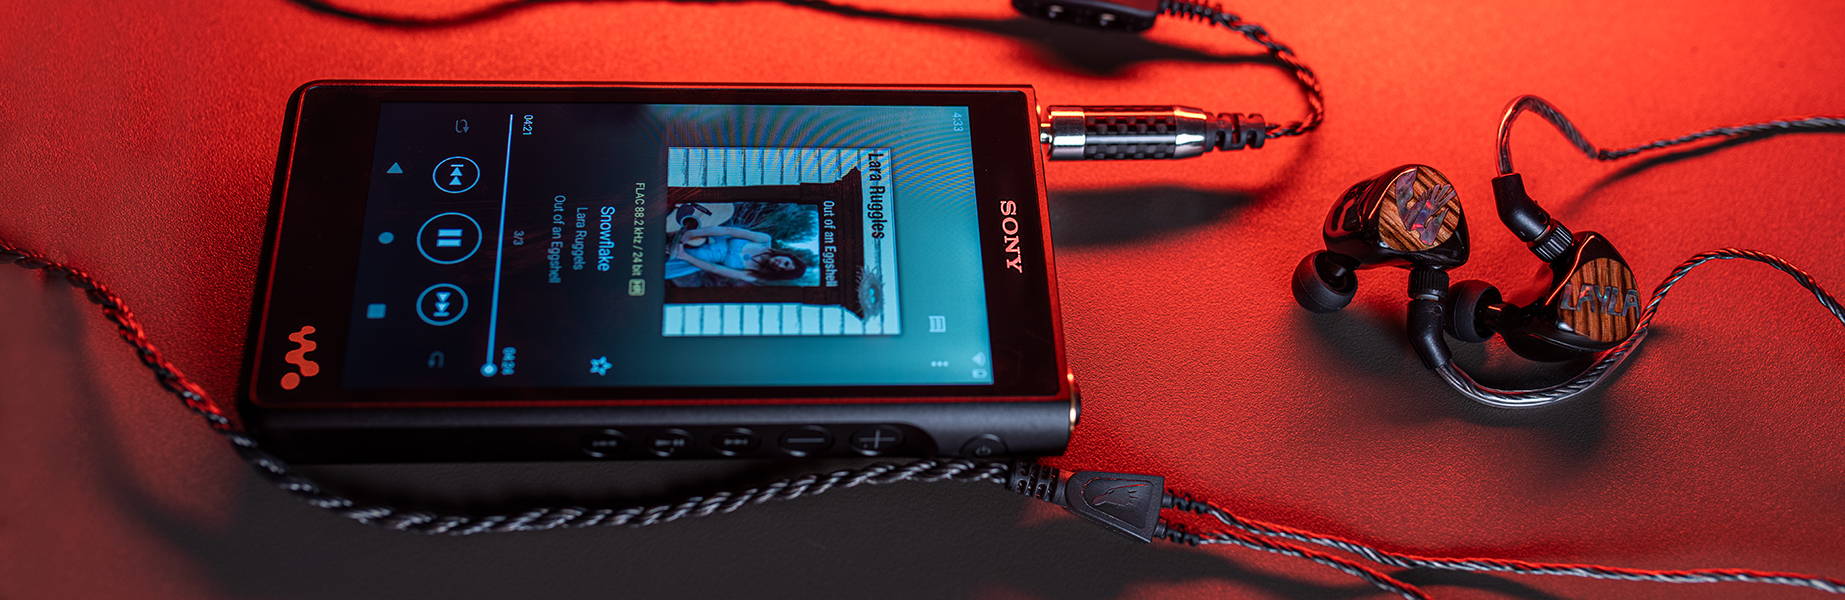 Sony NW-WM1AM2 Walkman Music Player Review - Moon Audio